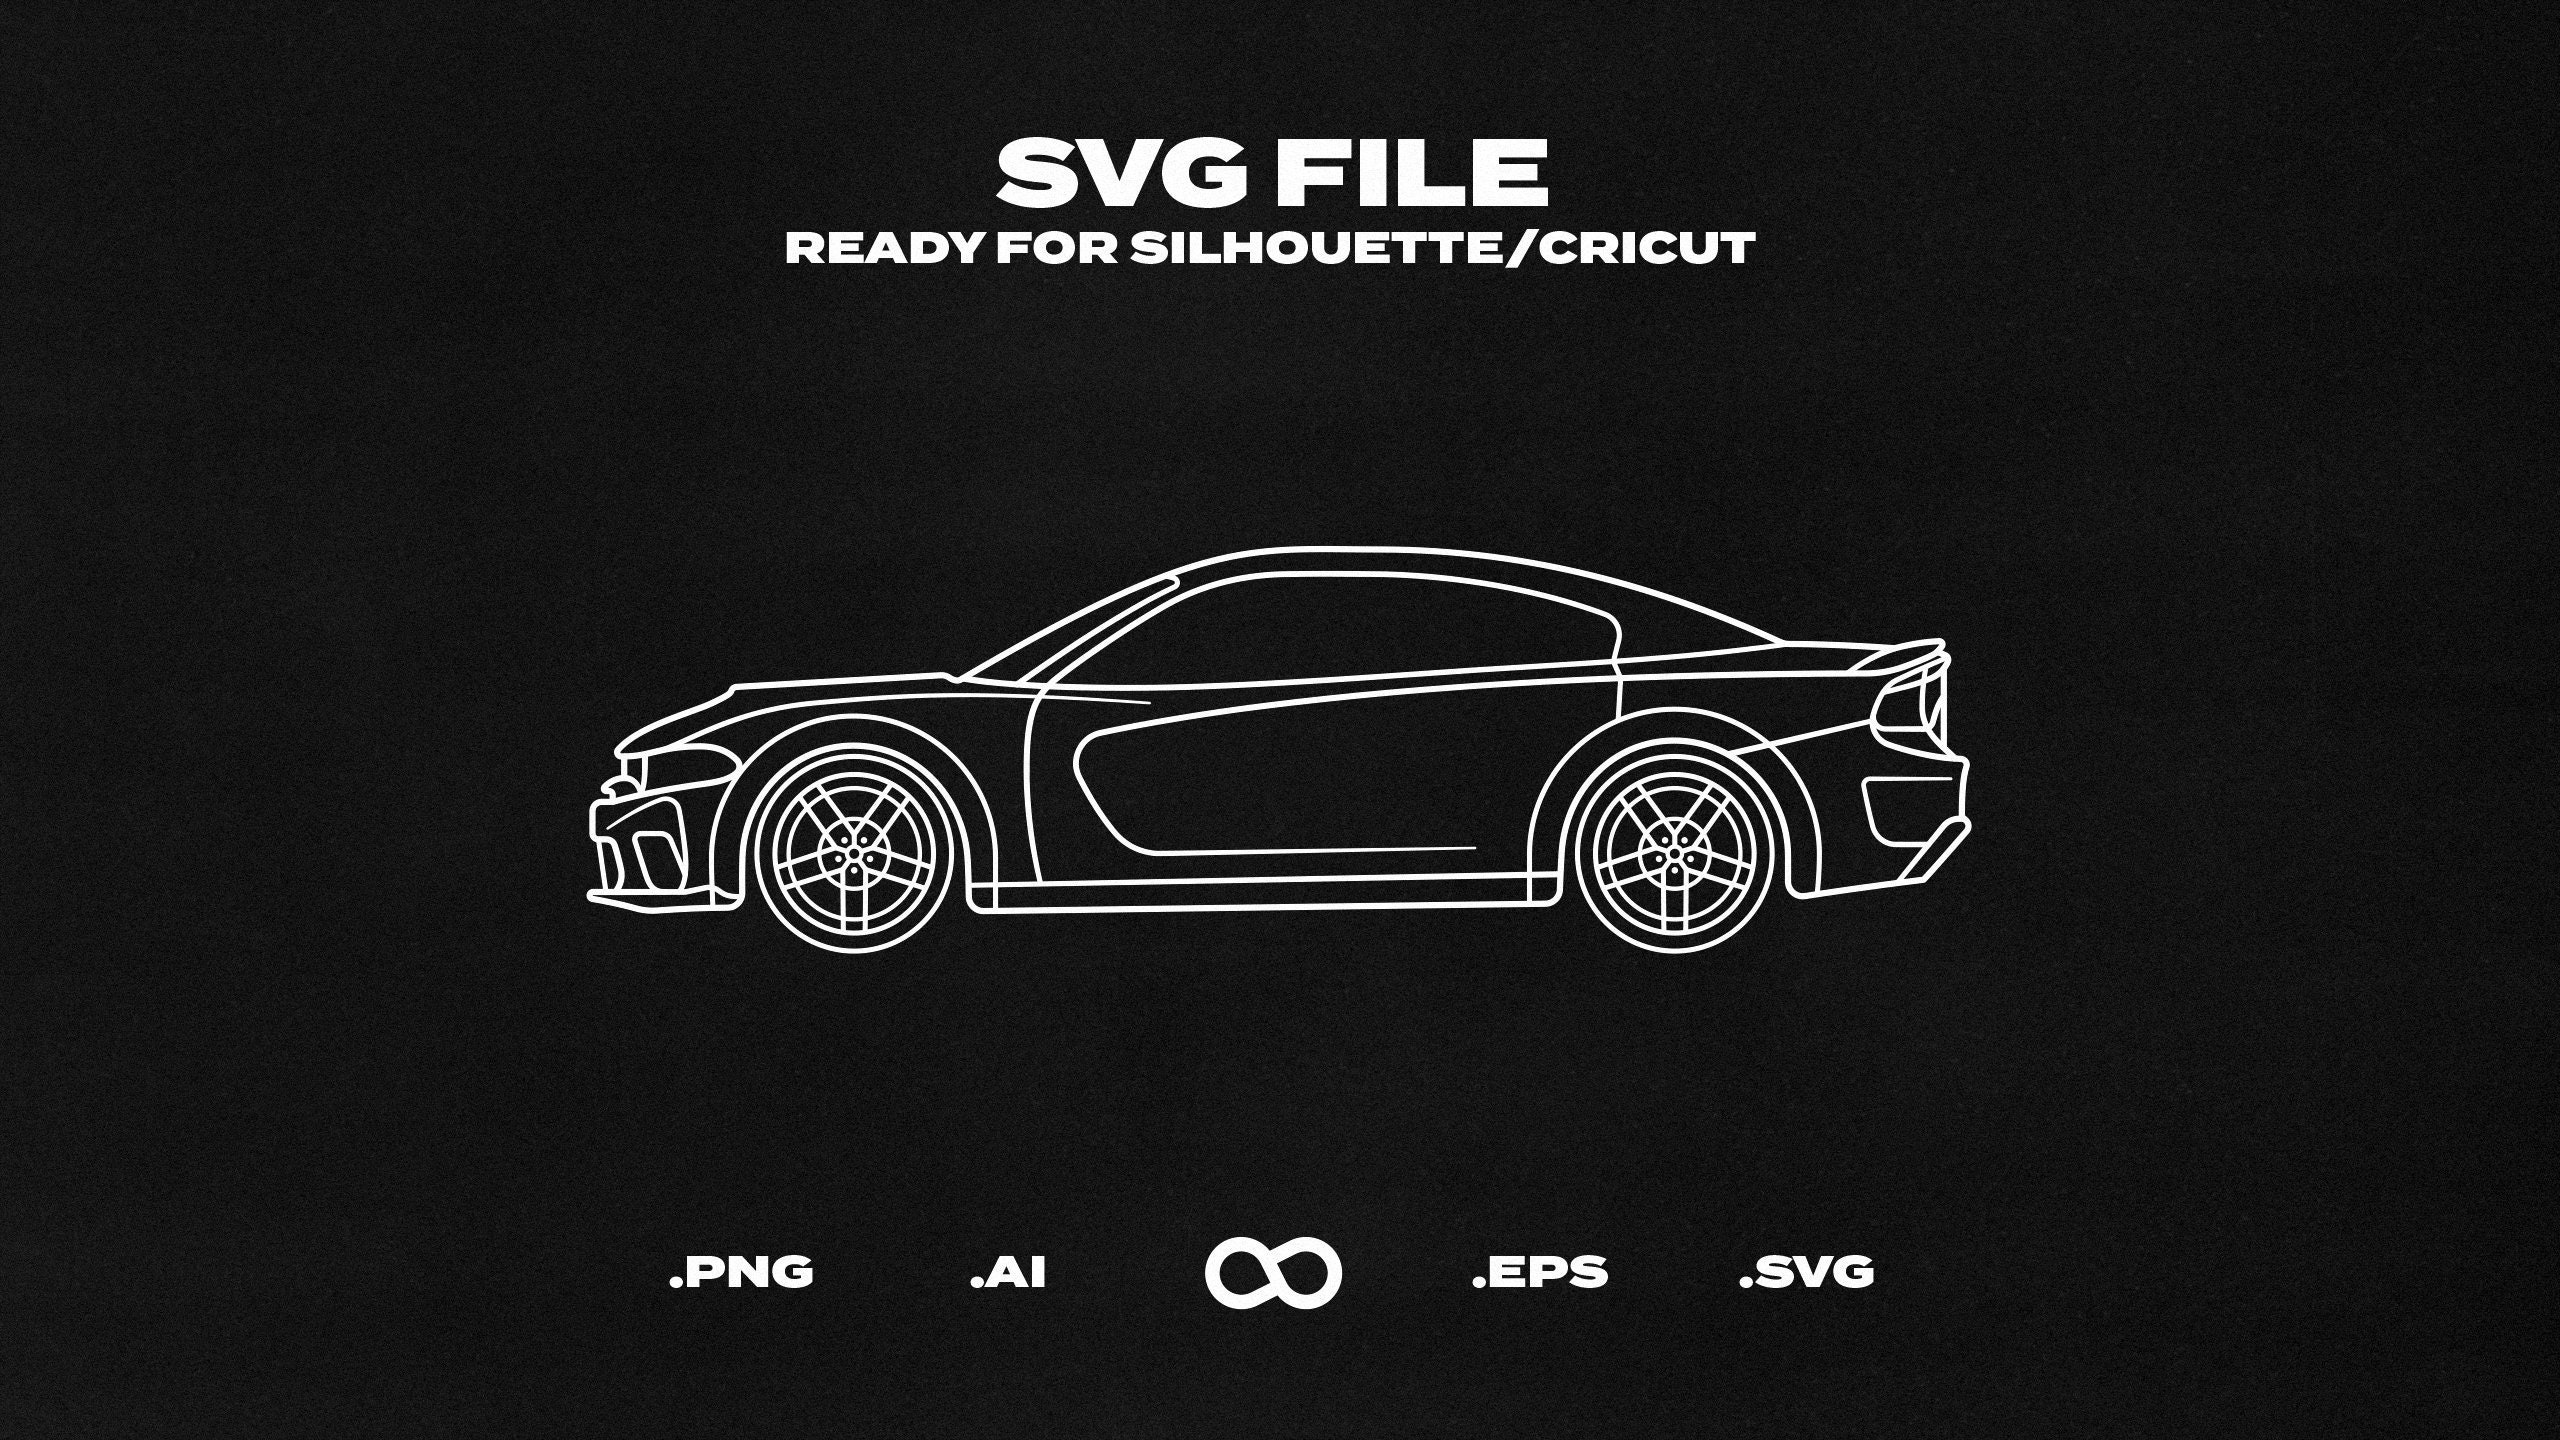 Charger SRT Hellcat 2020 Car SVG/EPS Outline Printable, Cricut & Silhouette  File 